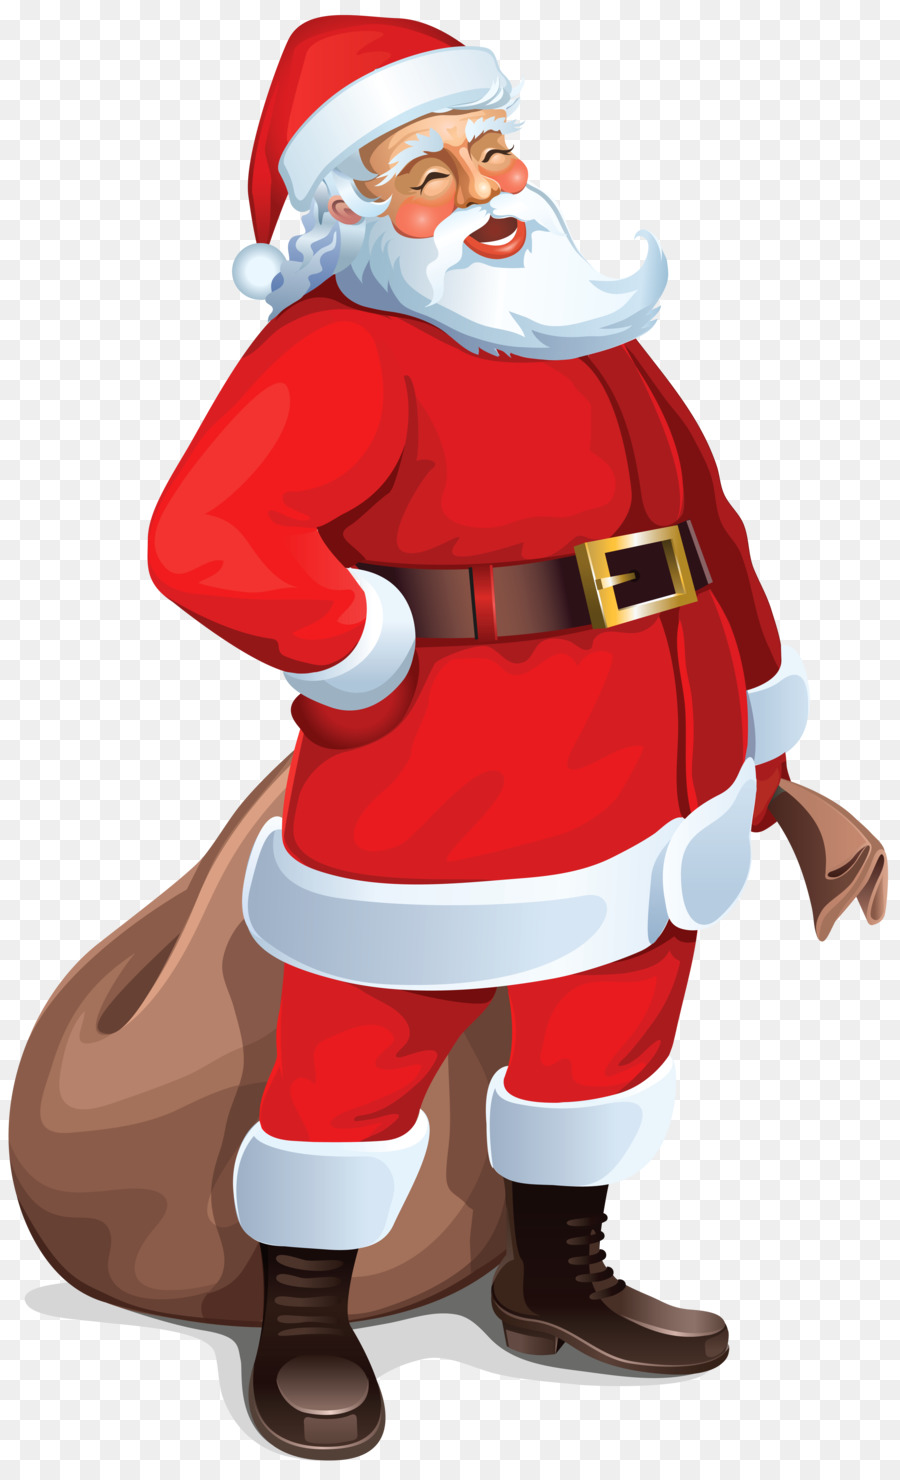 Santa Claus Clip art - Santa Claus png download - 3830*6238 - Free Transparent Santa Claus png Download.